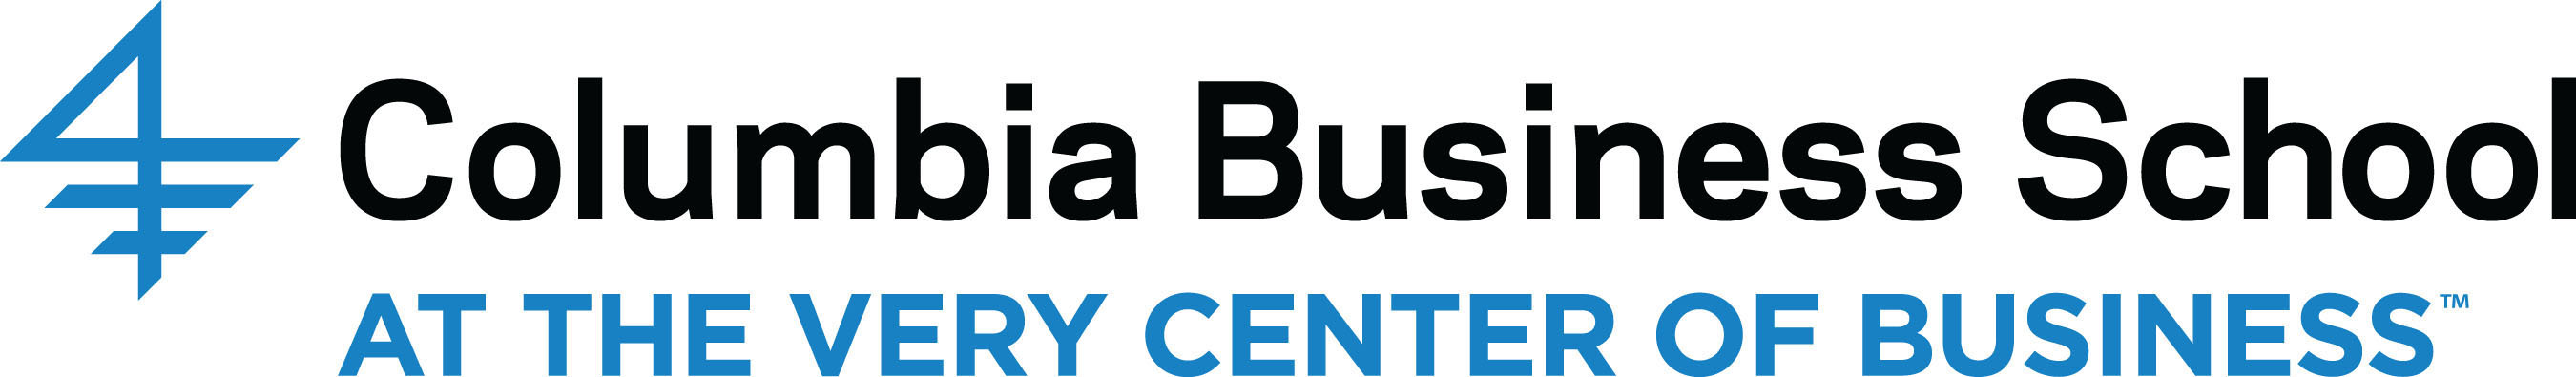 Columbia Business School Logo. (PRNewsFoto/Columbia Business School) (PRNewsFoto/)